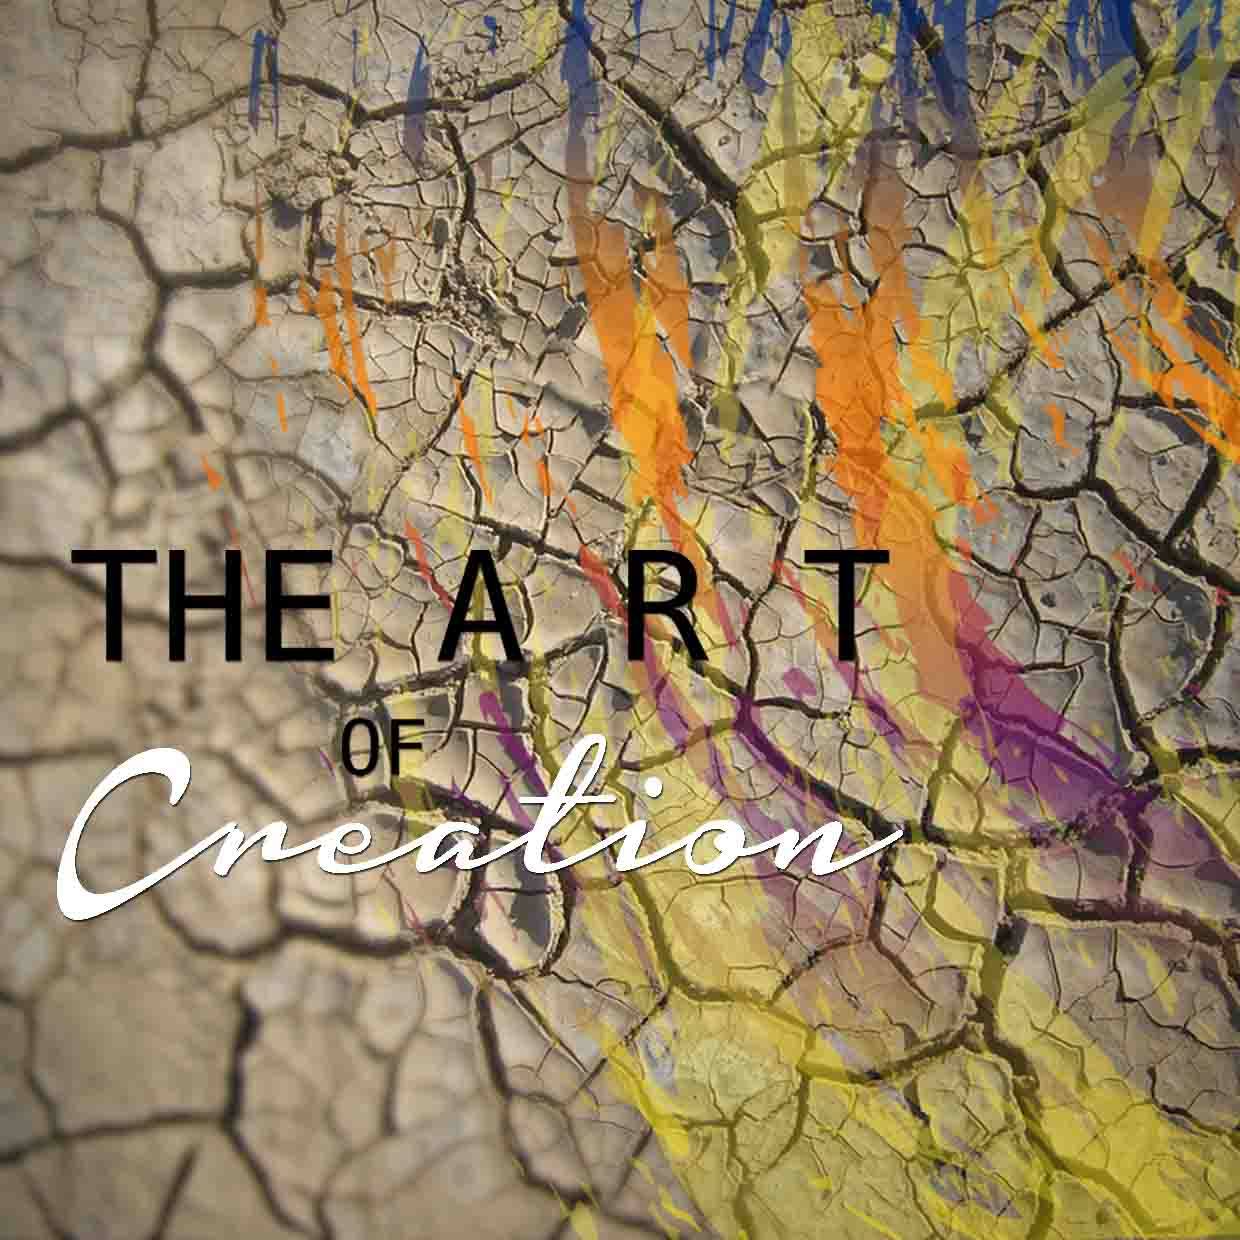 Art of Creation